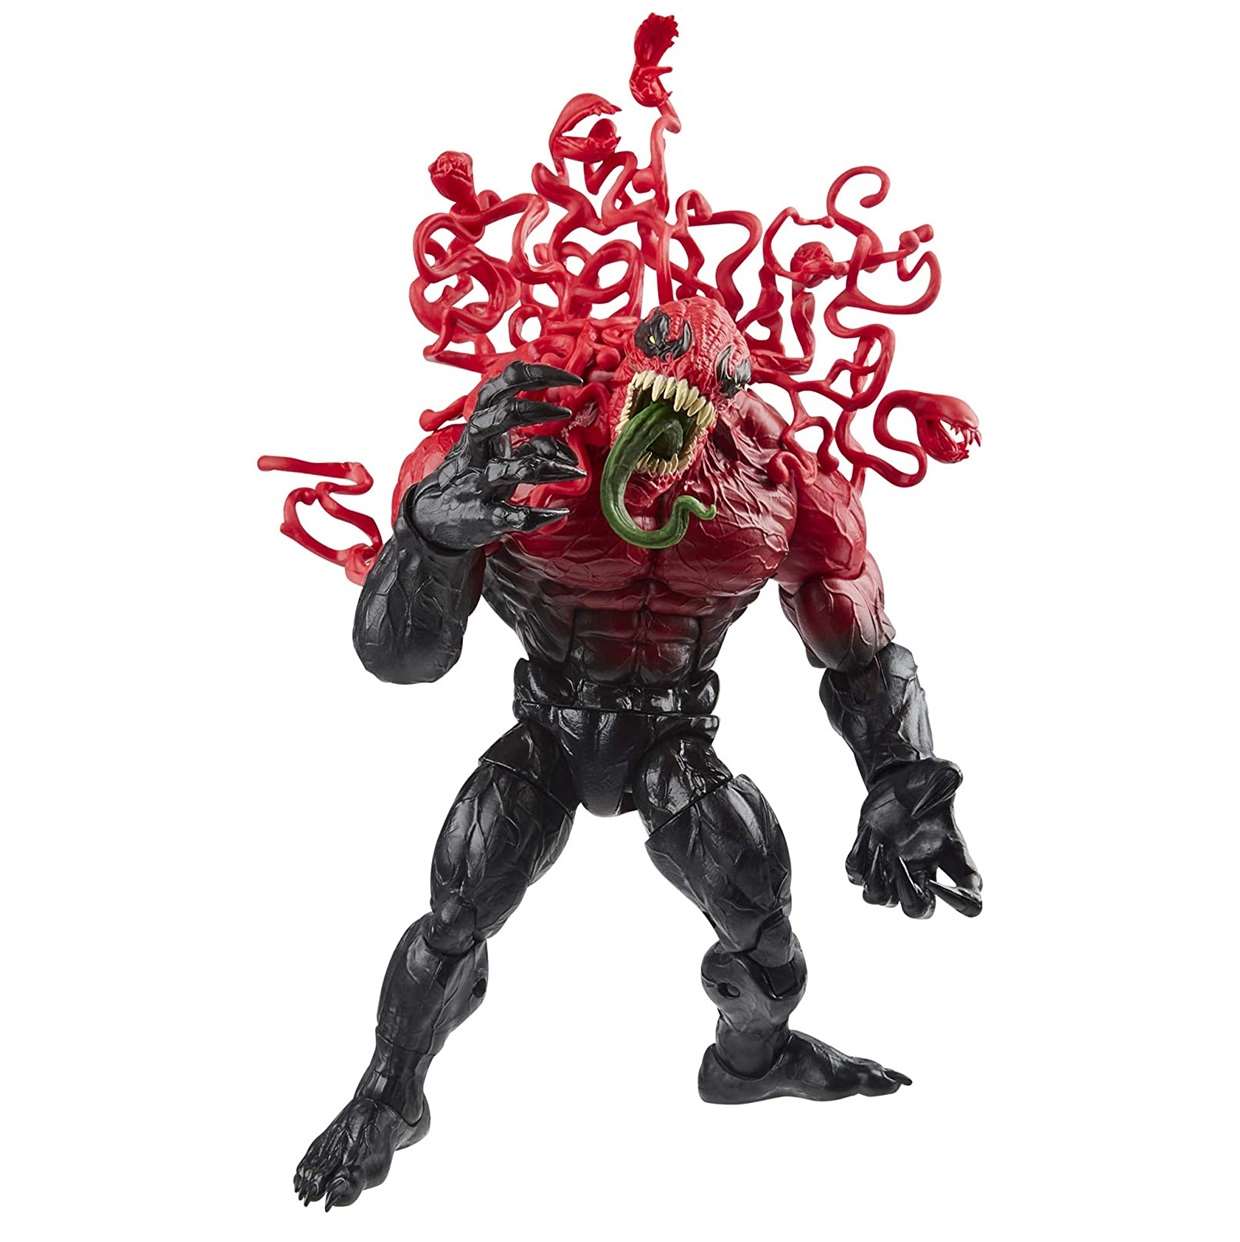 Toxina Figura Marvel Venom Legends Series 6 Pulgadas